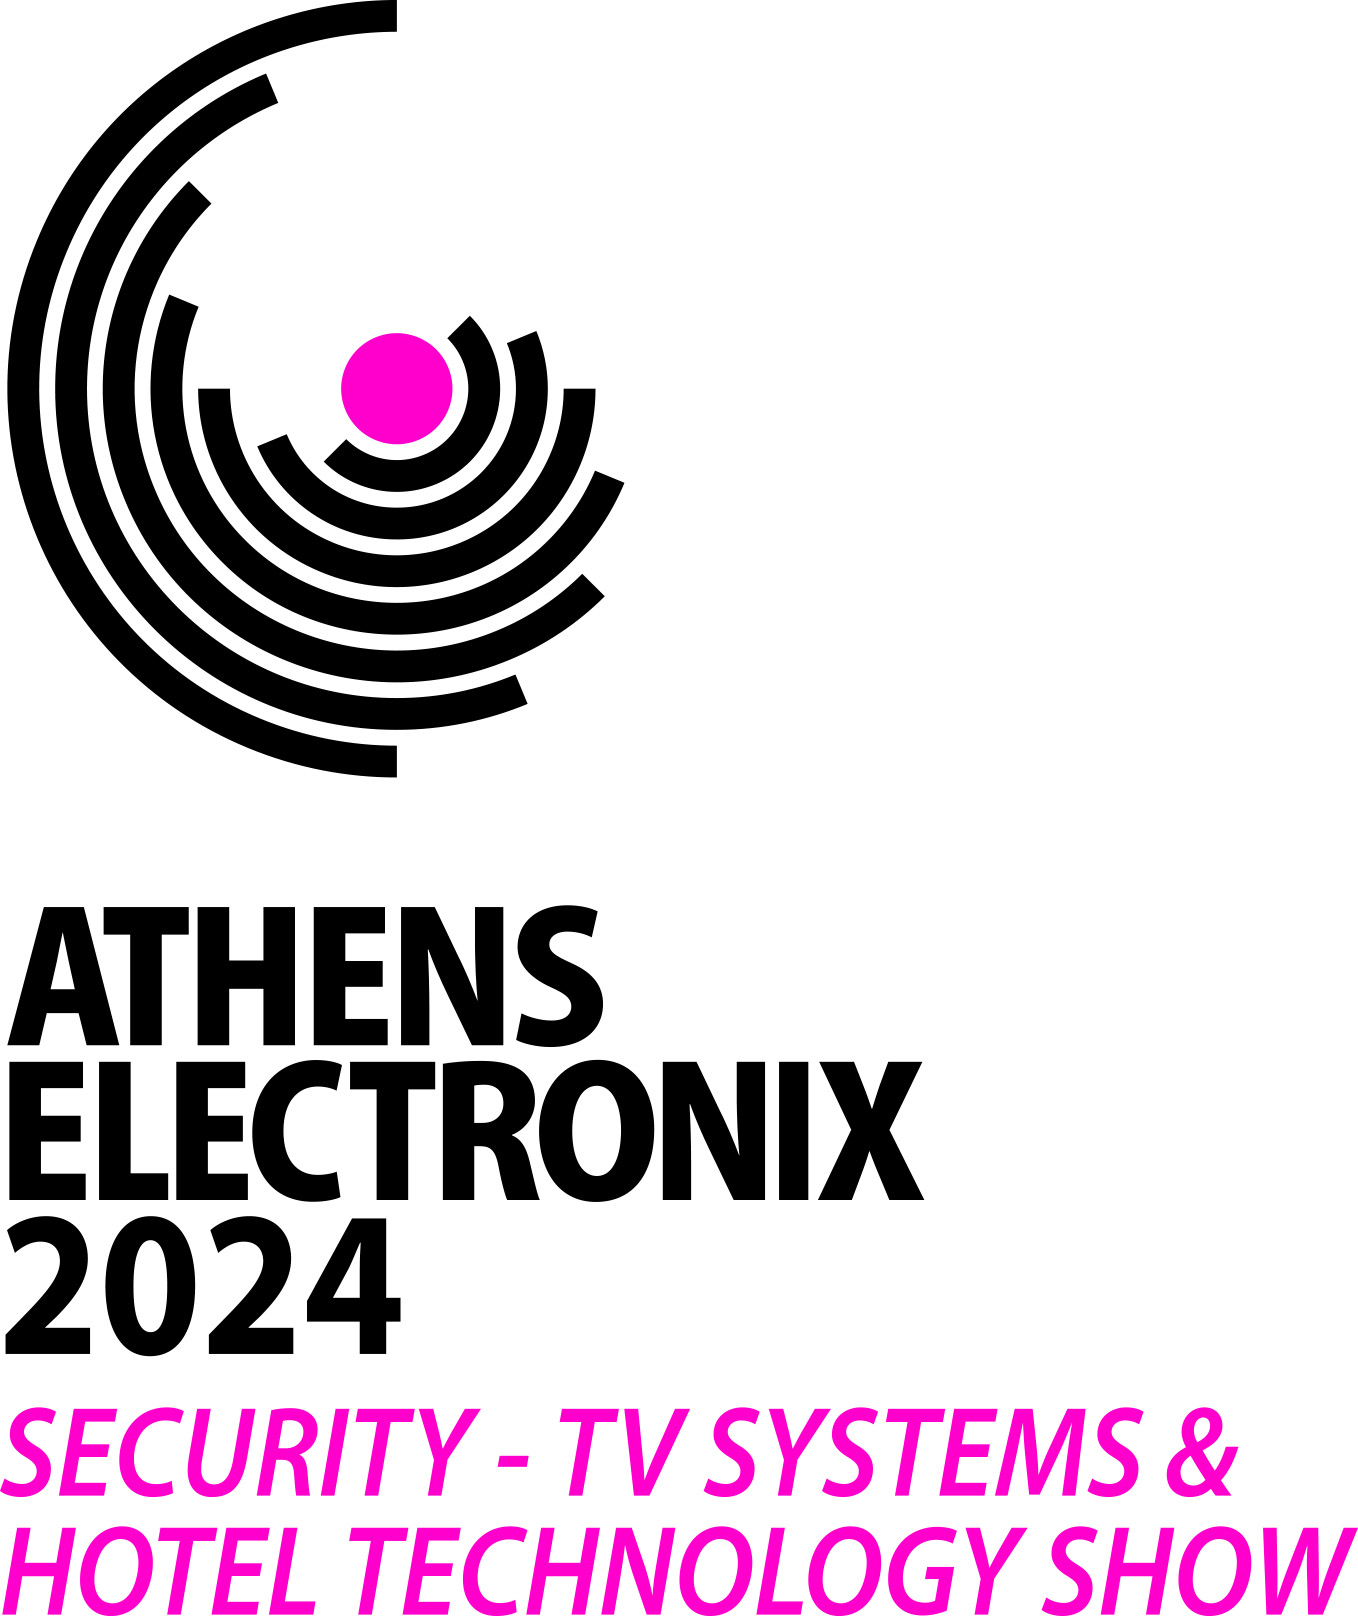 ATHENS ELECTRONIX 2024 1